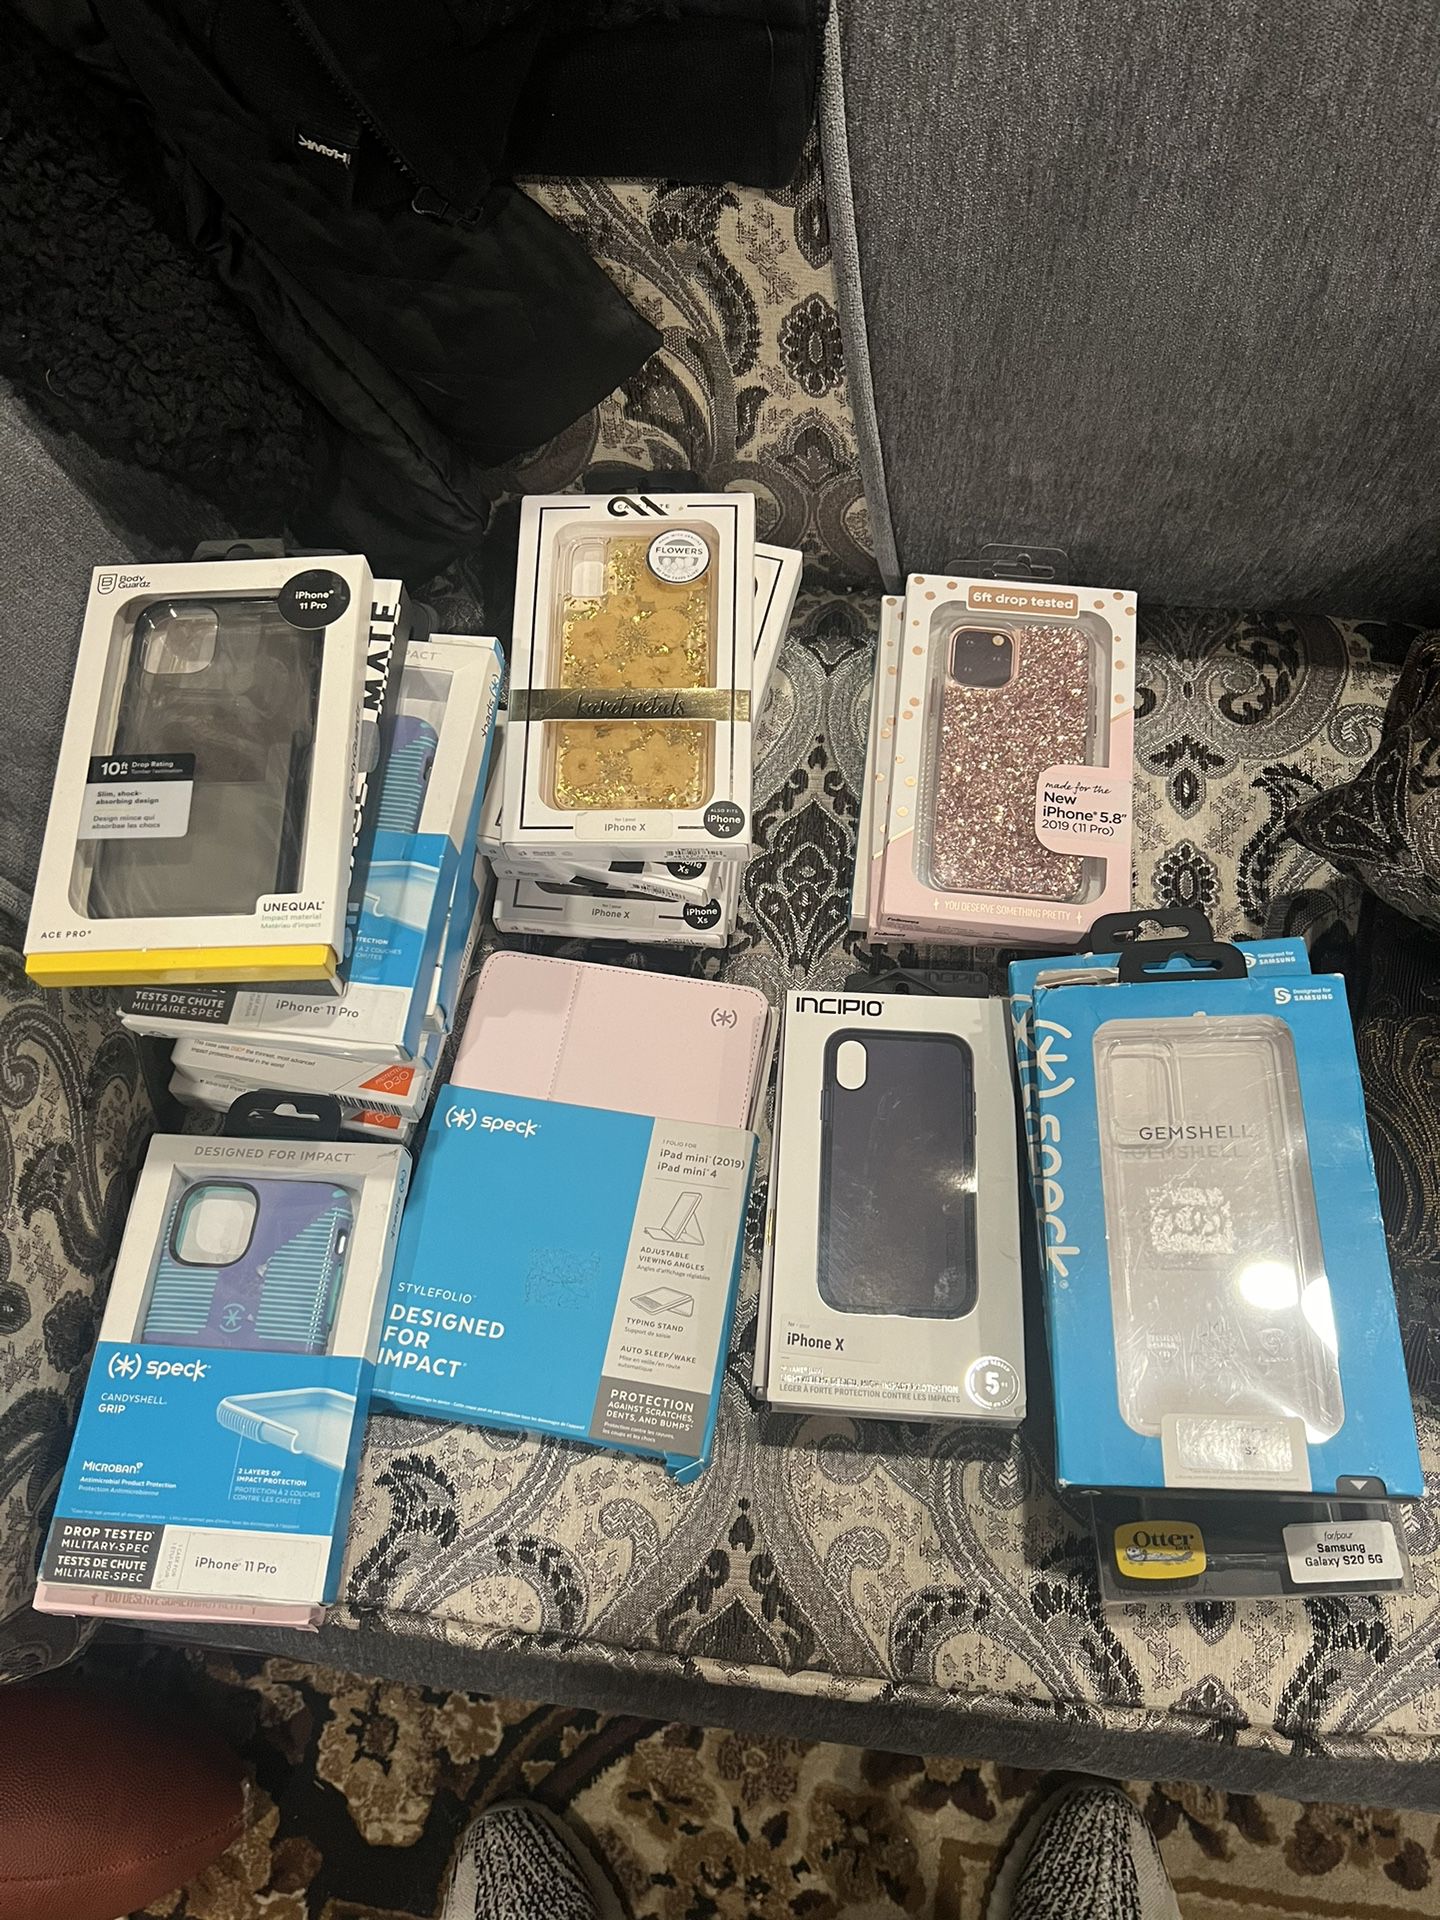 iPhone / Samsung Cases 